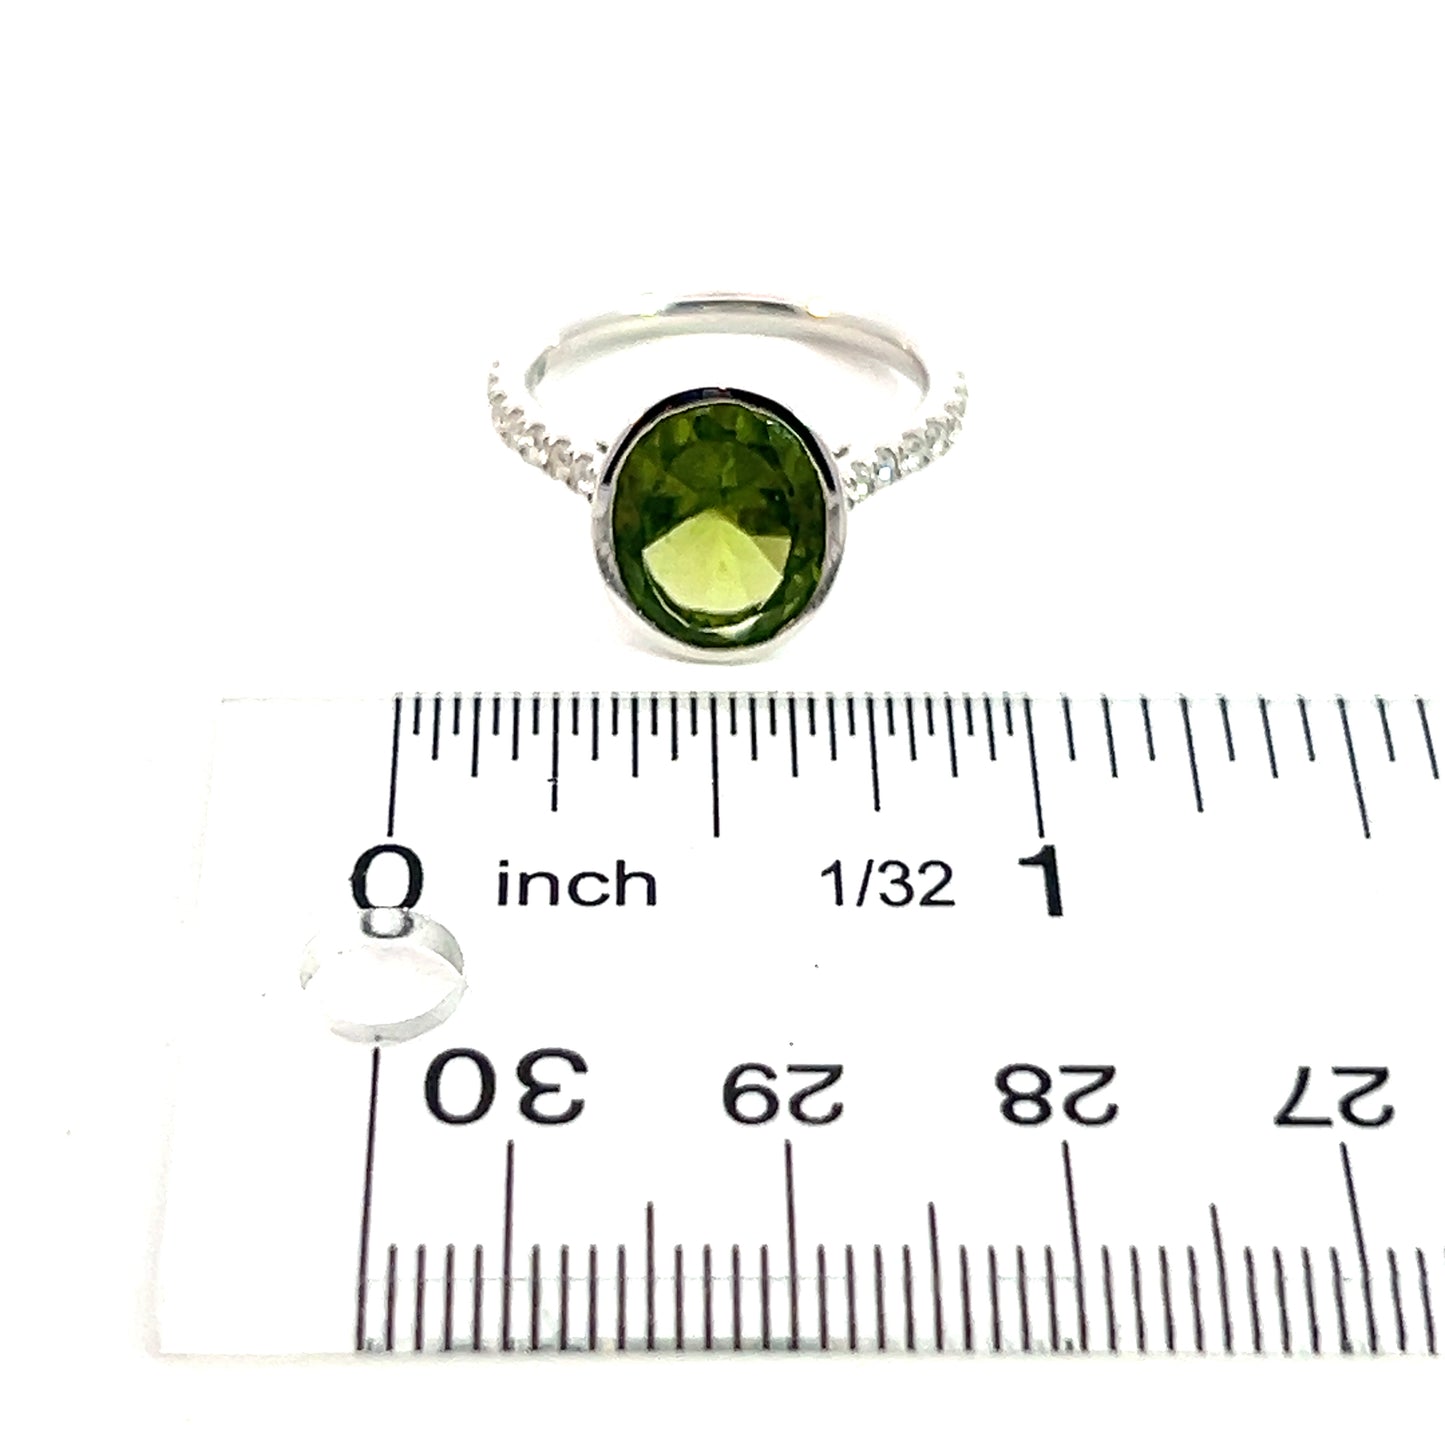 Natural Peridot Diamond Ring 6.5 14k W Gold 3.49 TCW Certified $4,950 310621 - Certified Fine Jewelry